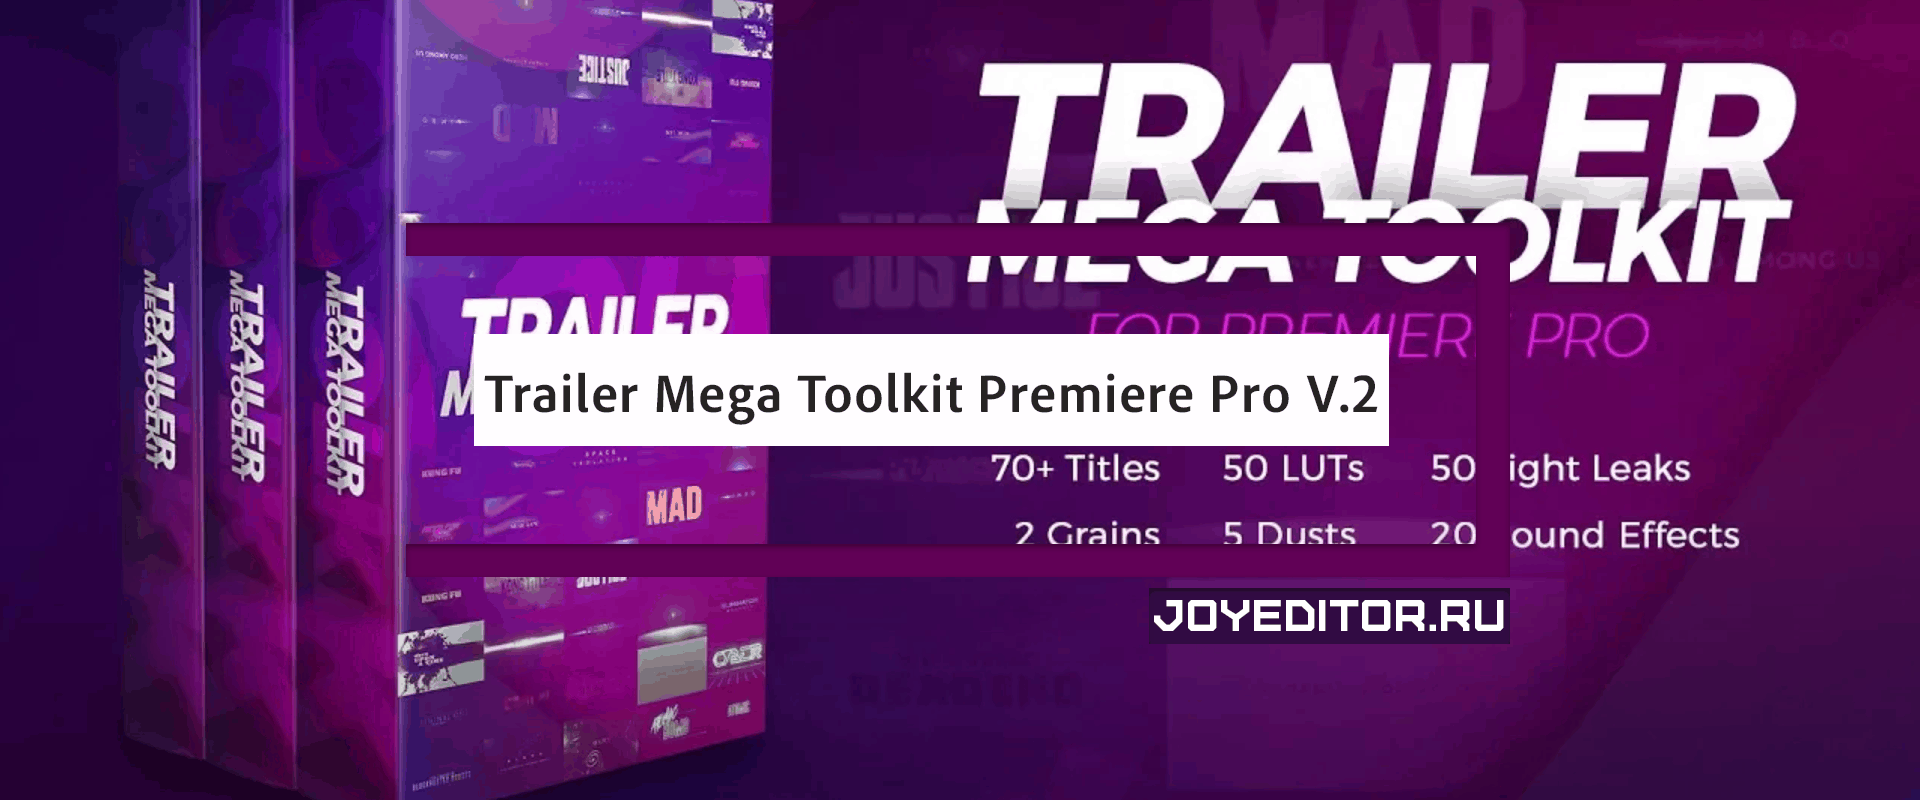 Trailer Mega Toolkit Premiere Pro V.2